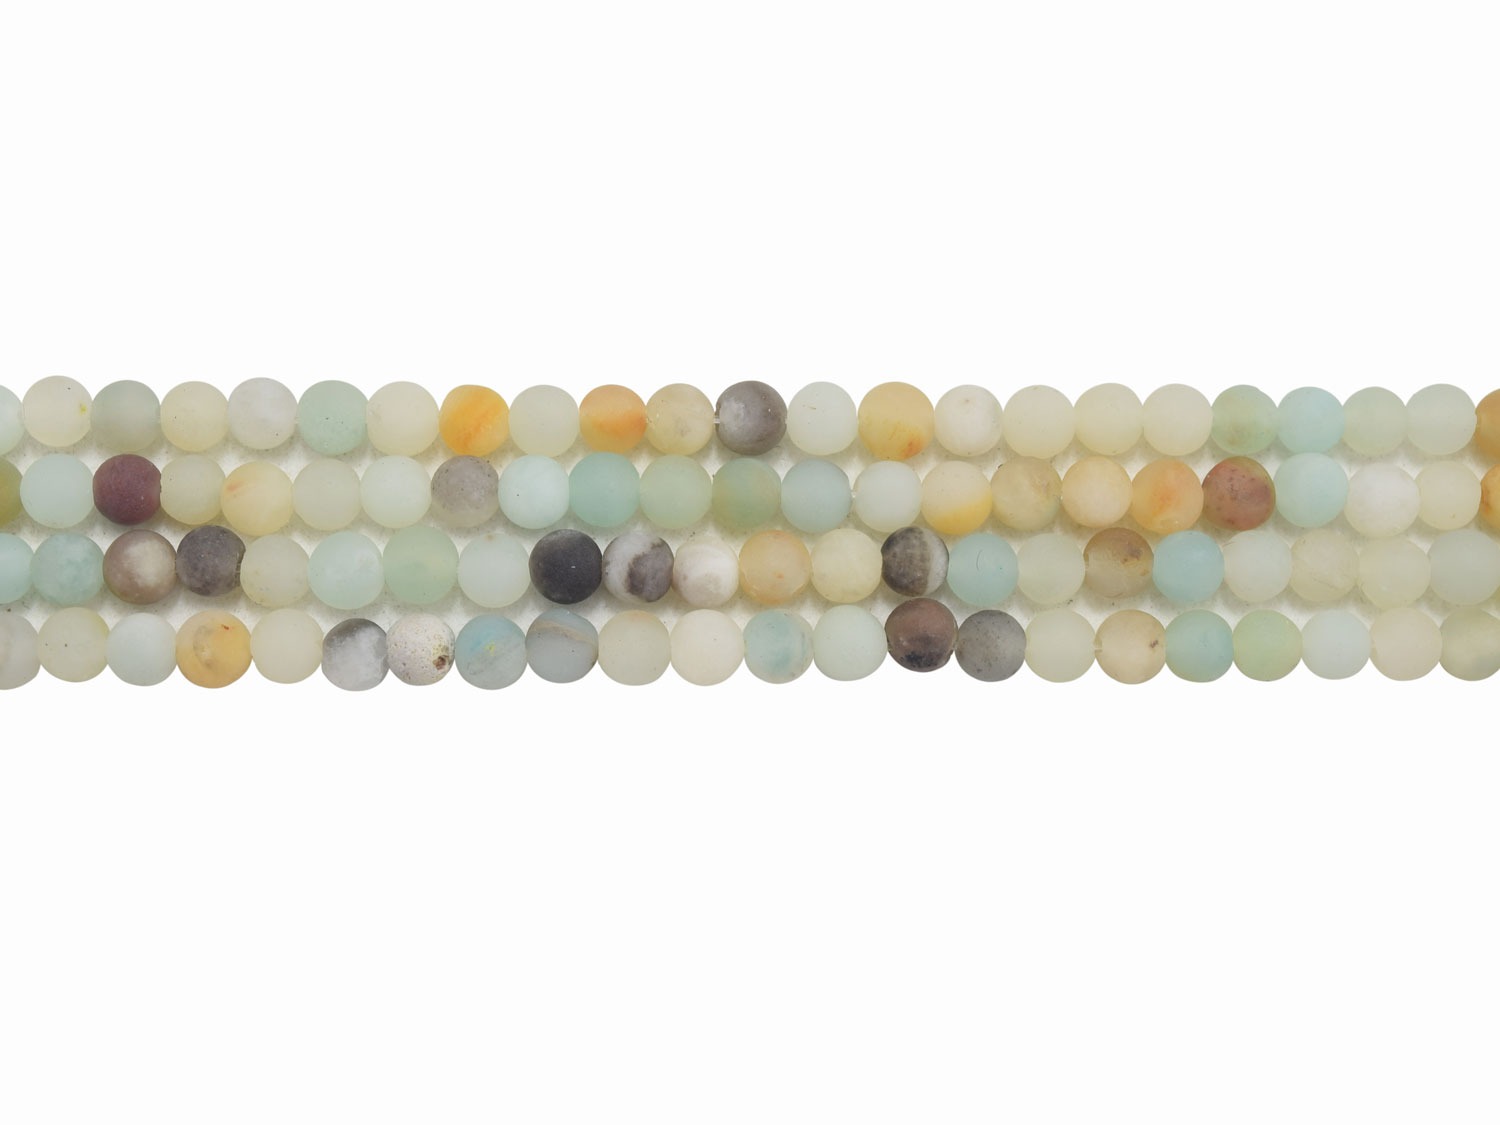 85 Pcs 4mm Beads Crystal Beads Jewelry Making Spacer Beads Lake Medium Blue